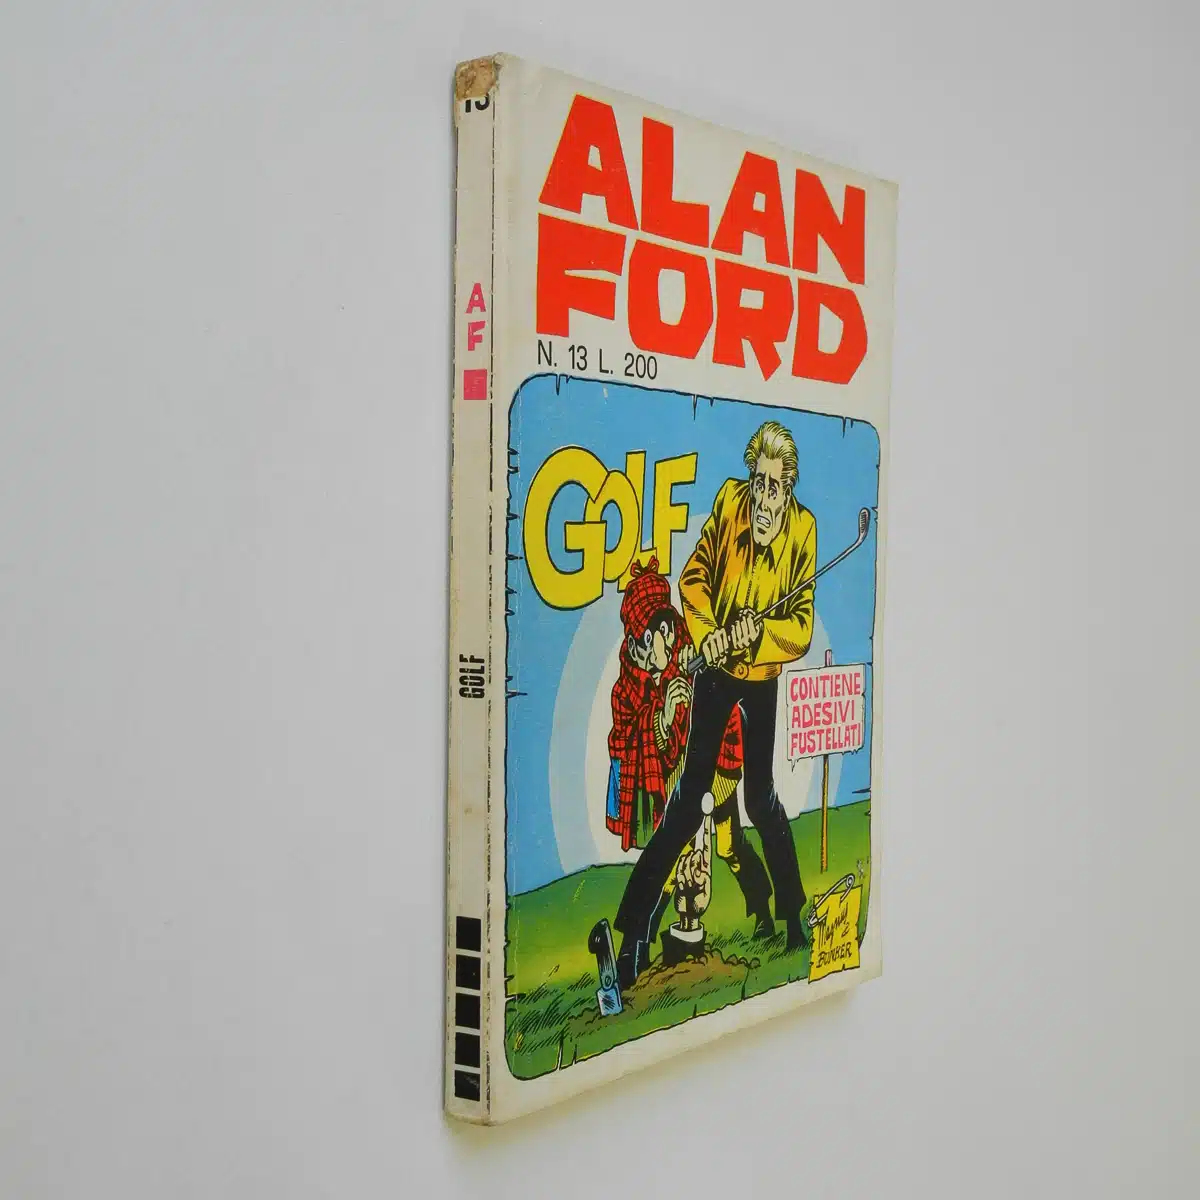 Alan Ford n. 13 con Adesivi Golf